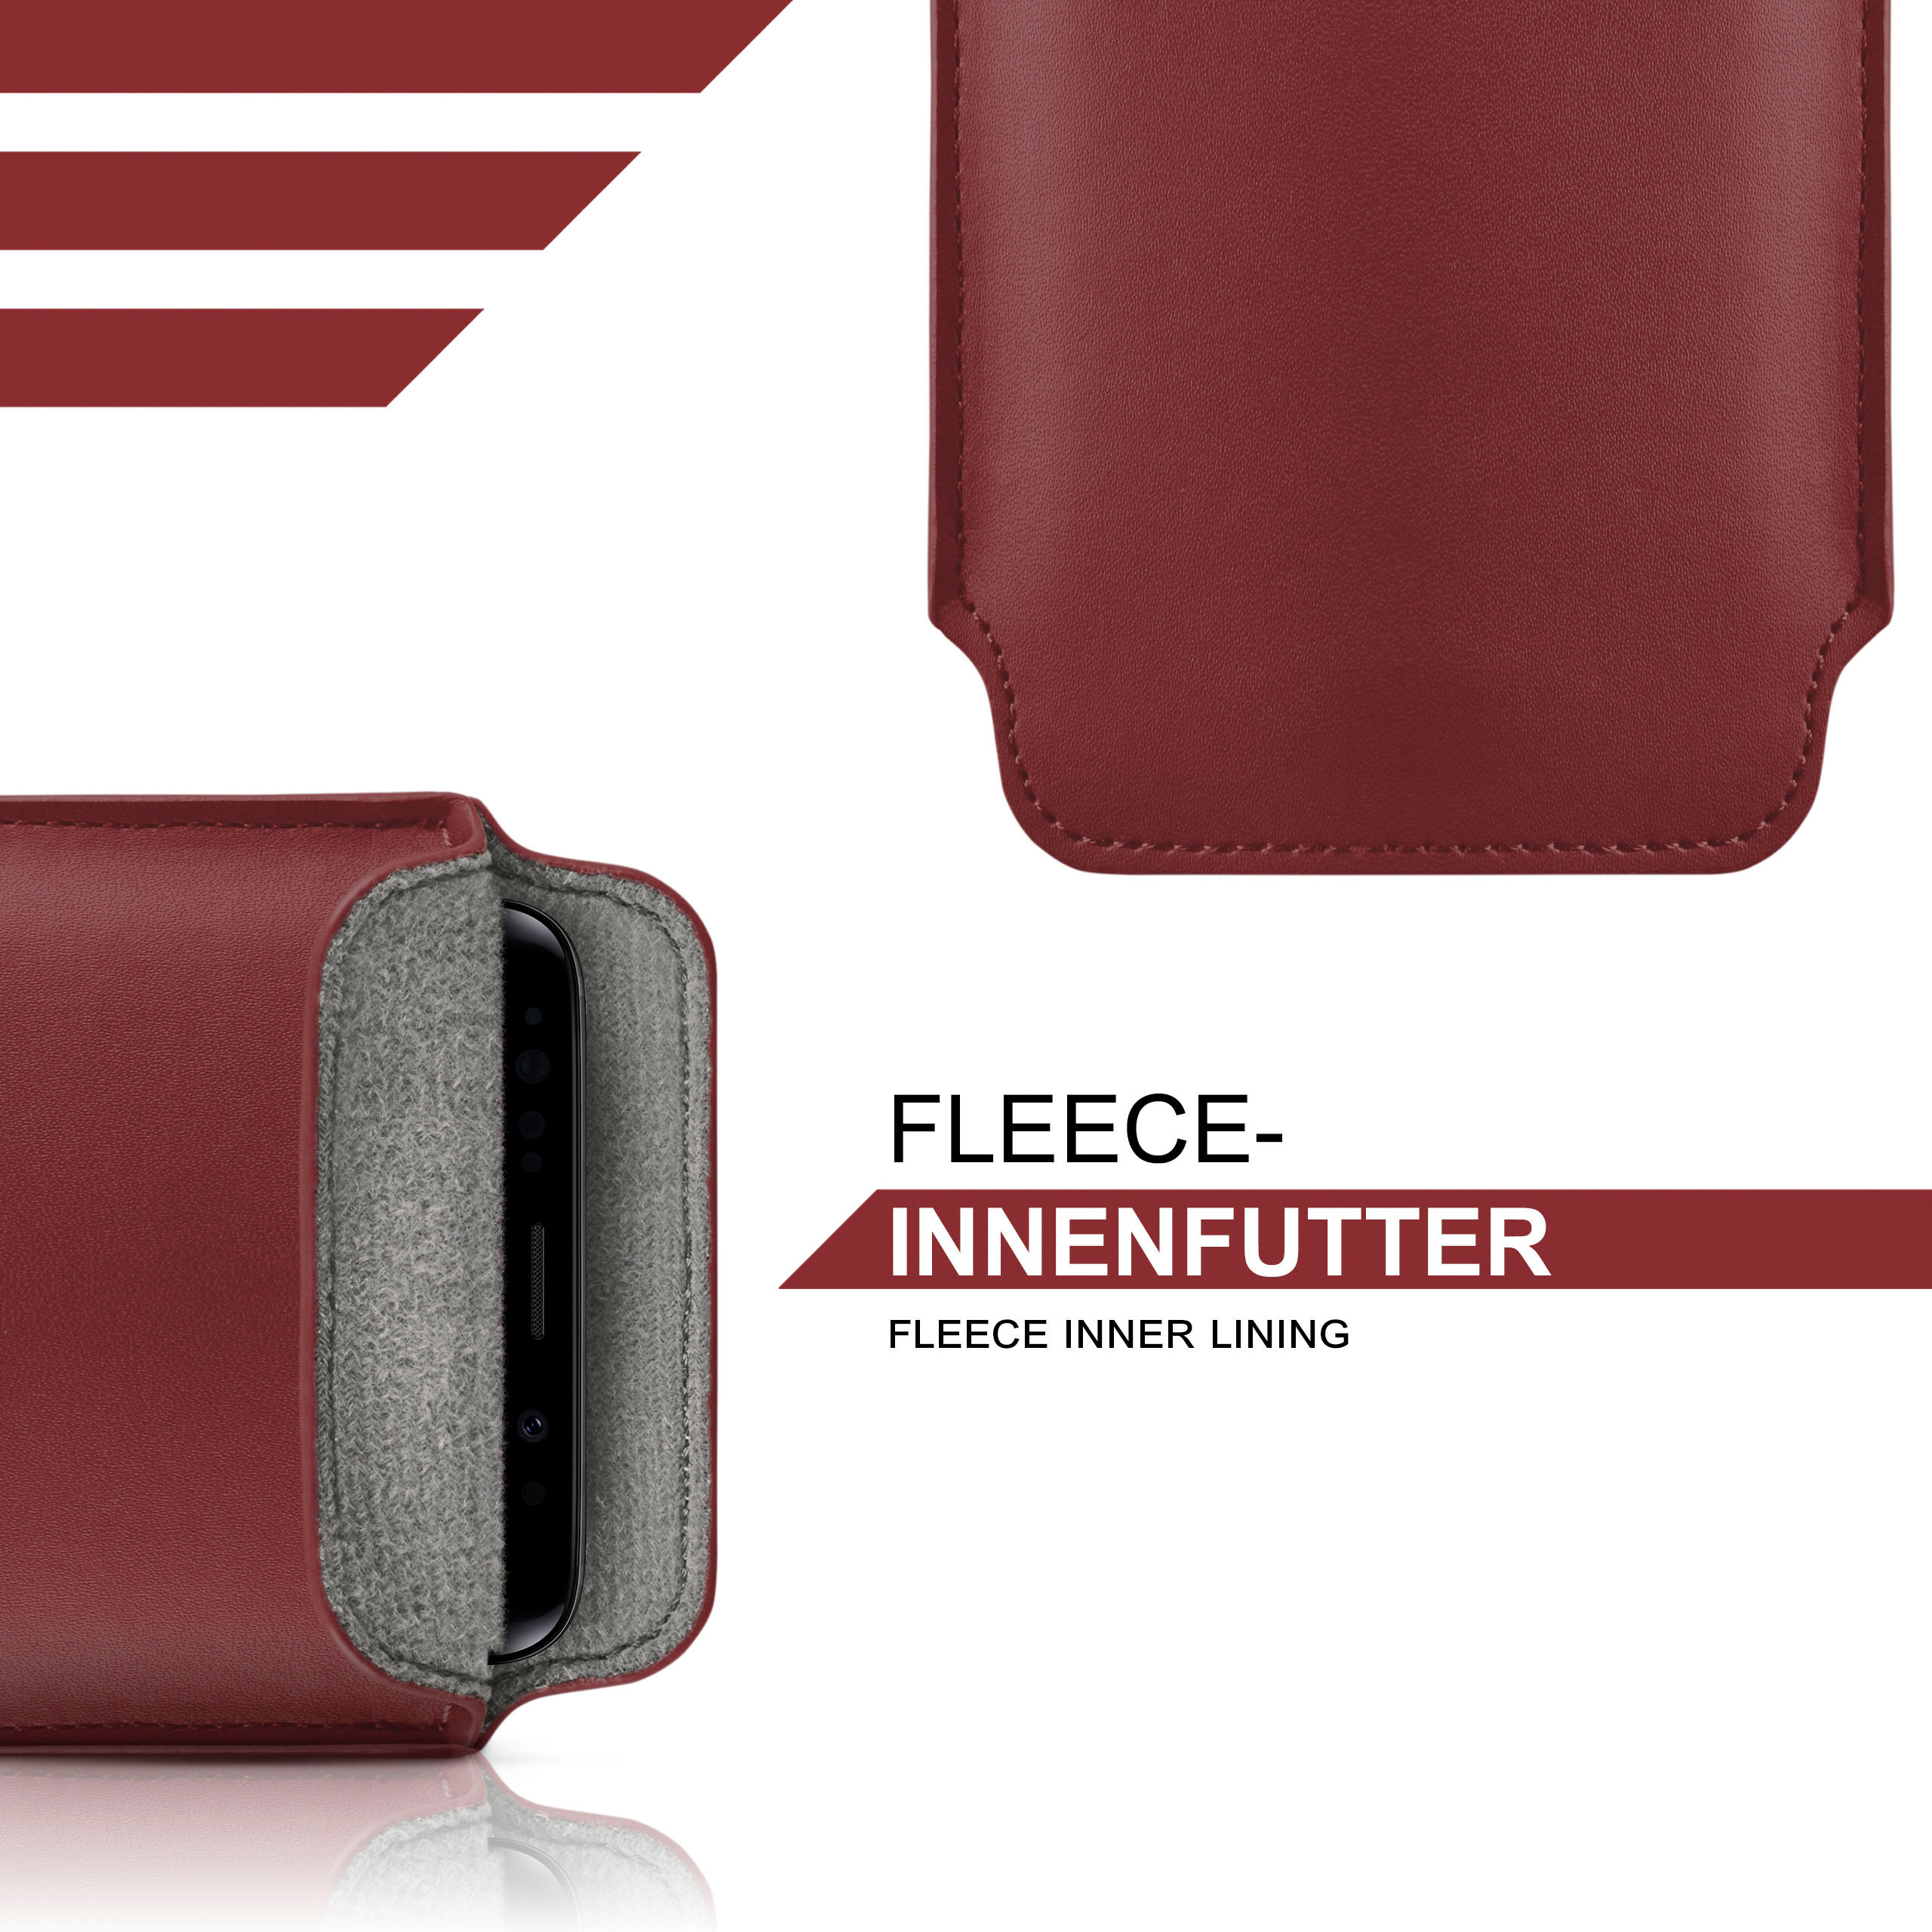 Zest Plus, Case, Cover, Slide Maroon-Red MOEX Acer, Full Liquid